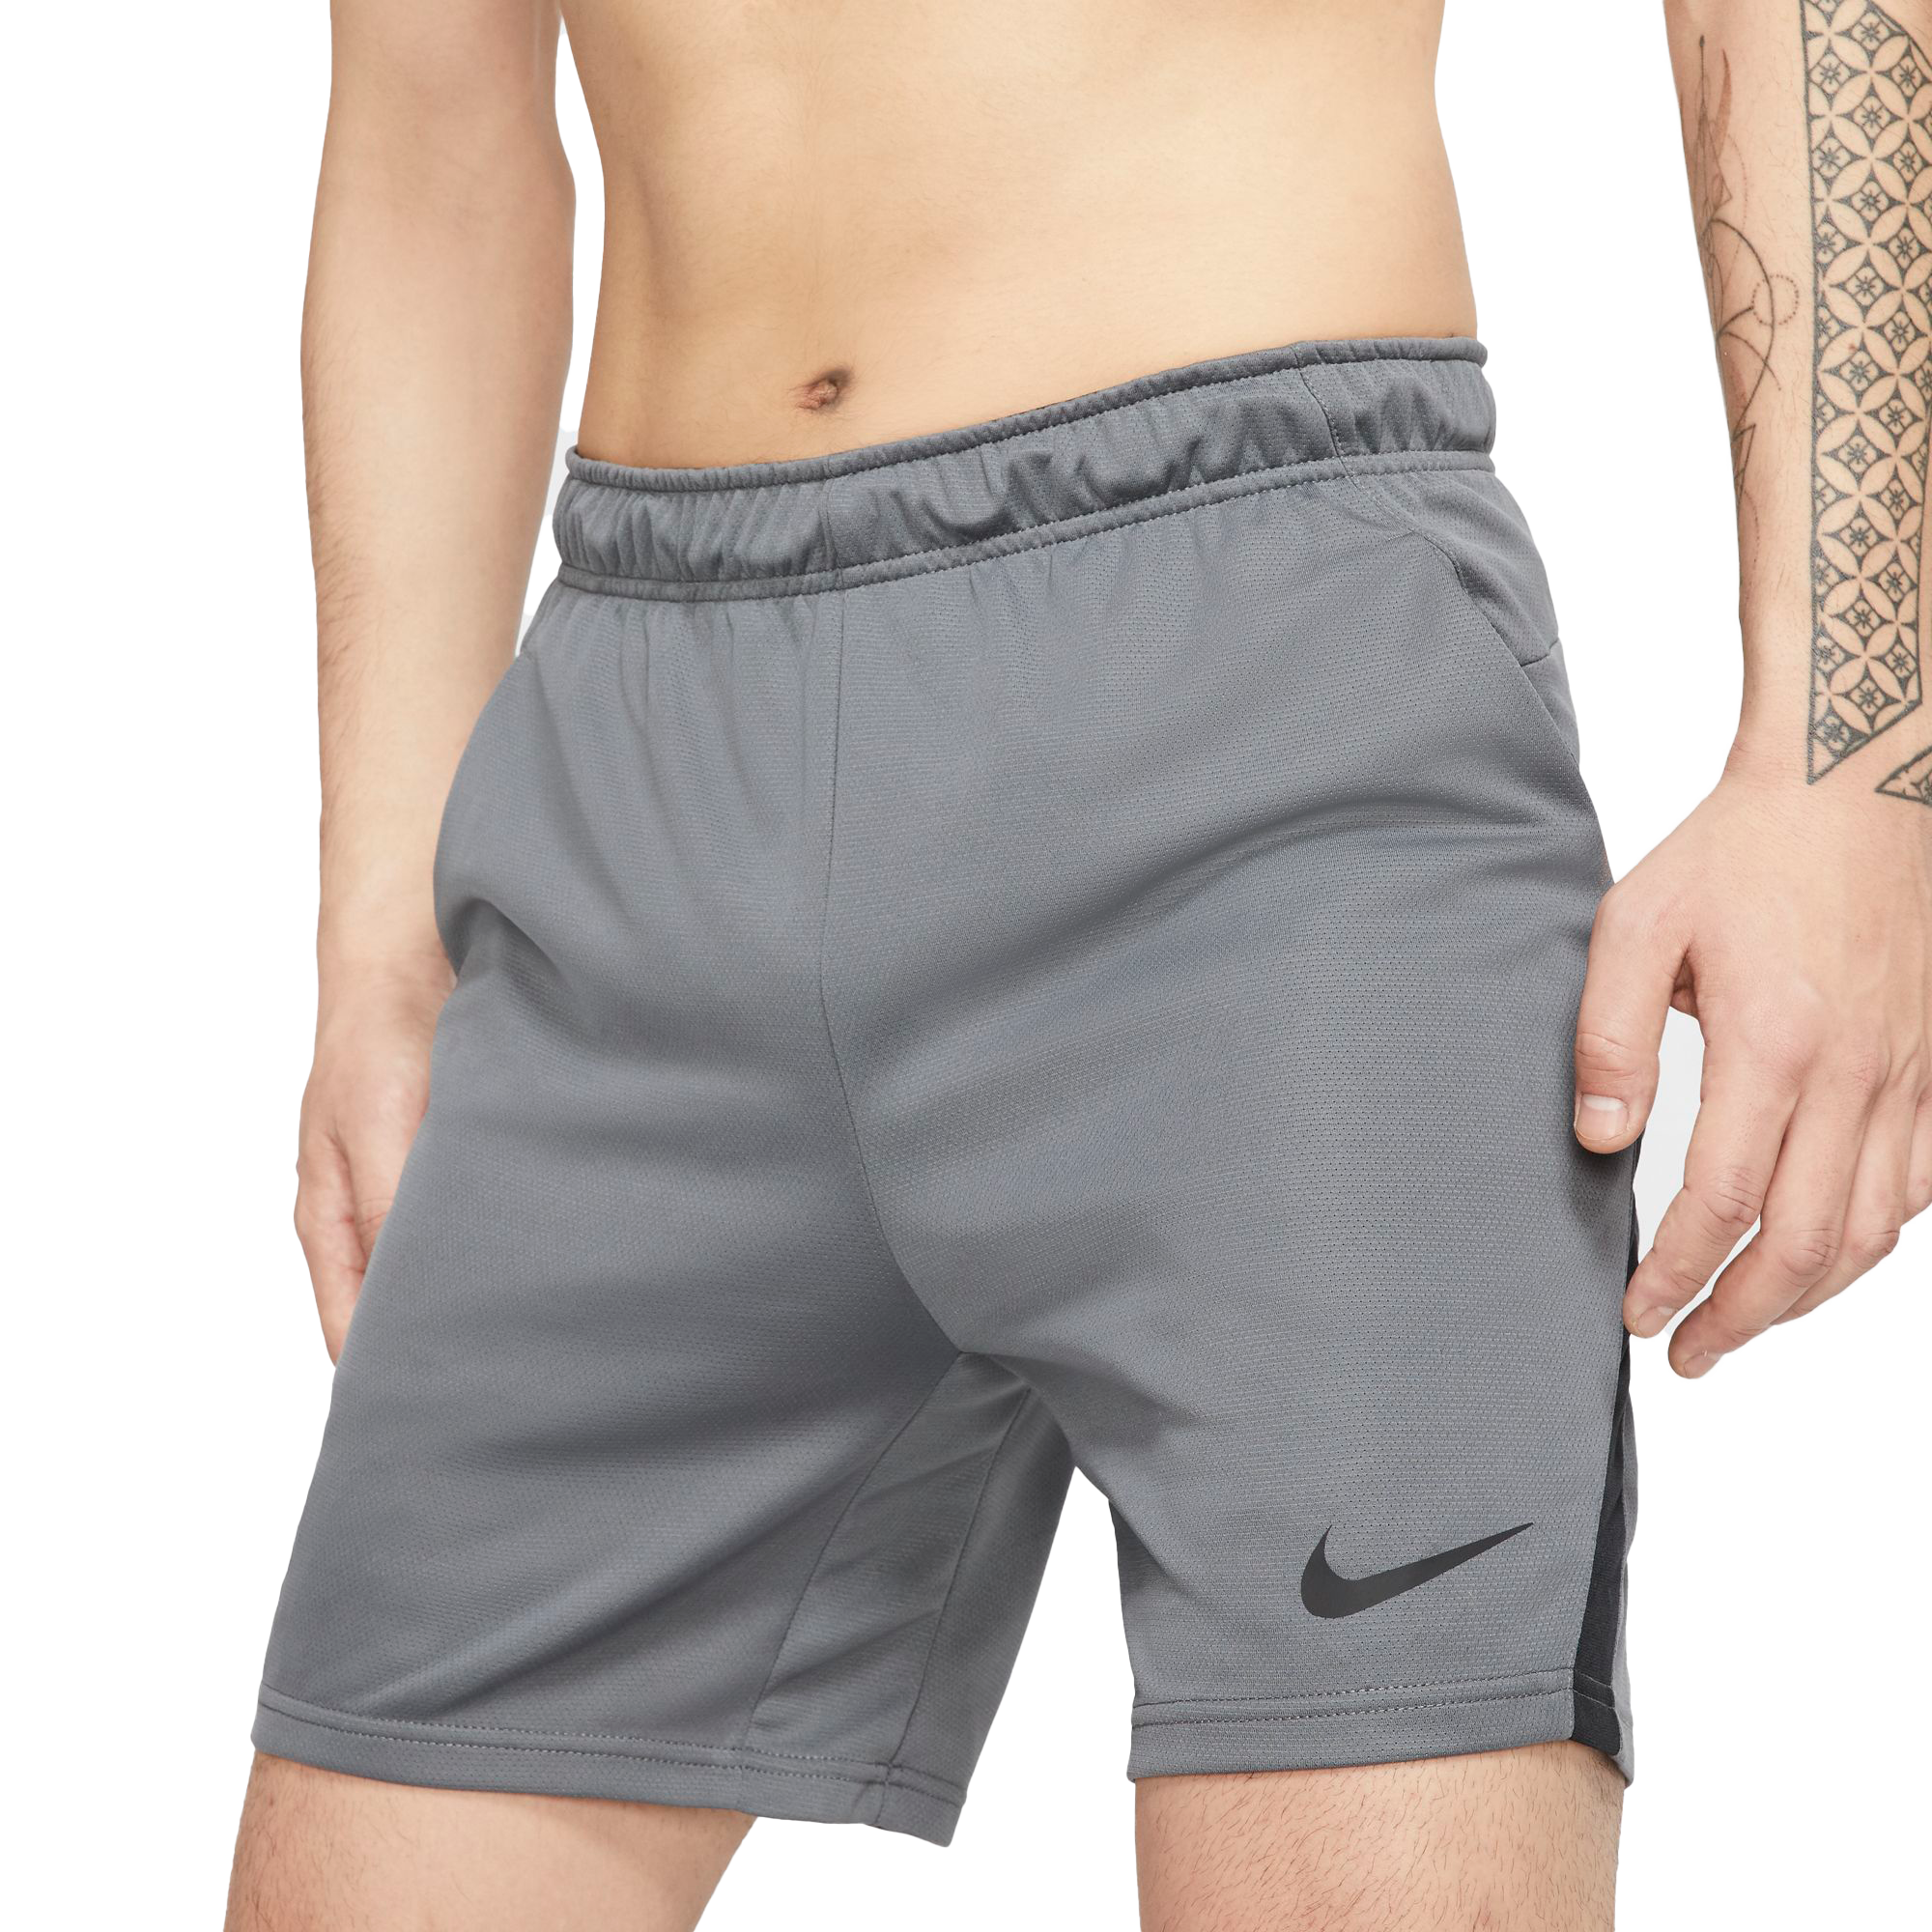 Nike Men's Training Shorts 4.0 